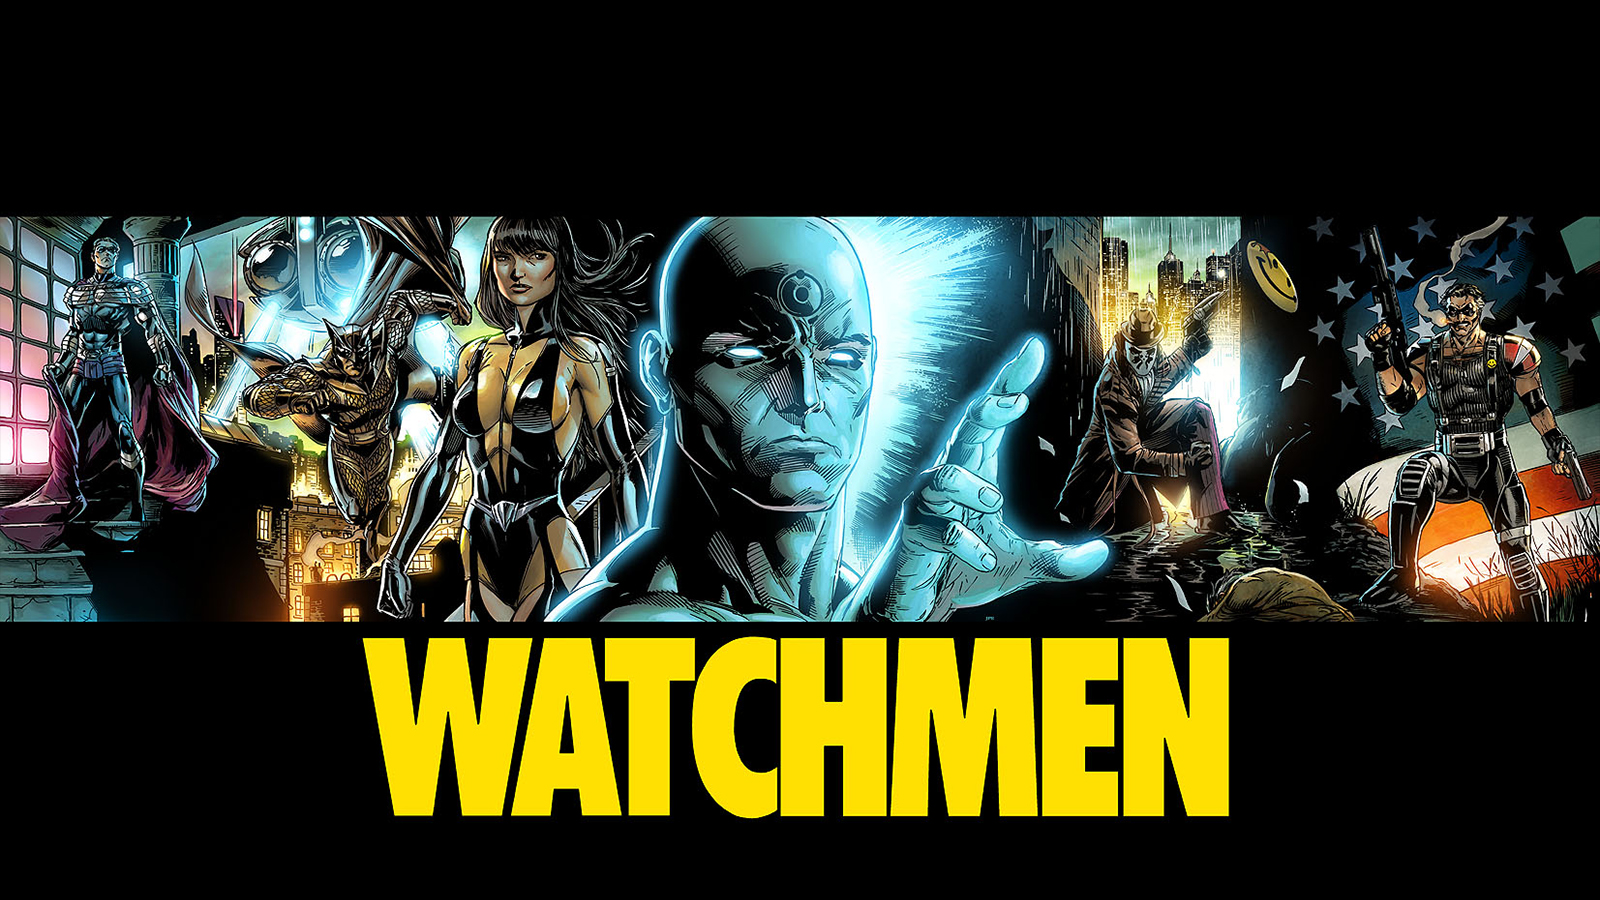 Watchmen Black superhero wallpaper 1600x900 110729 WallpaperUP